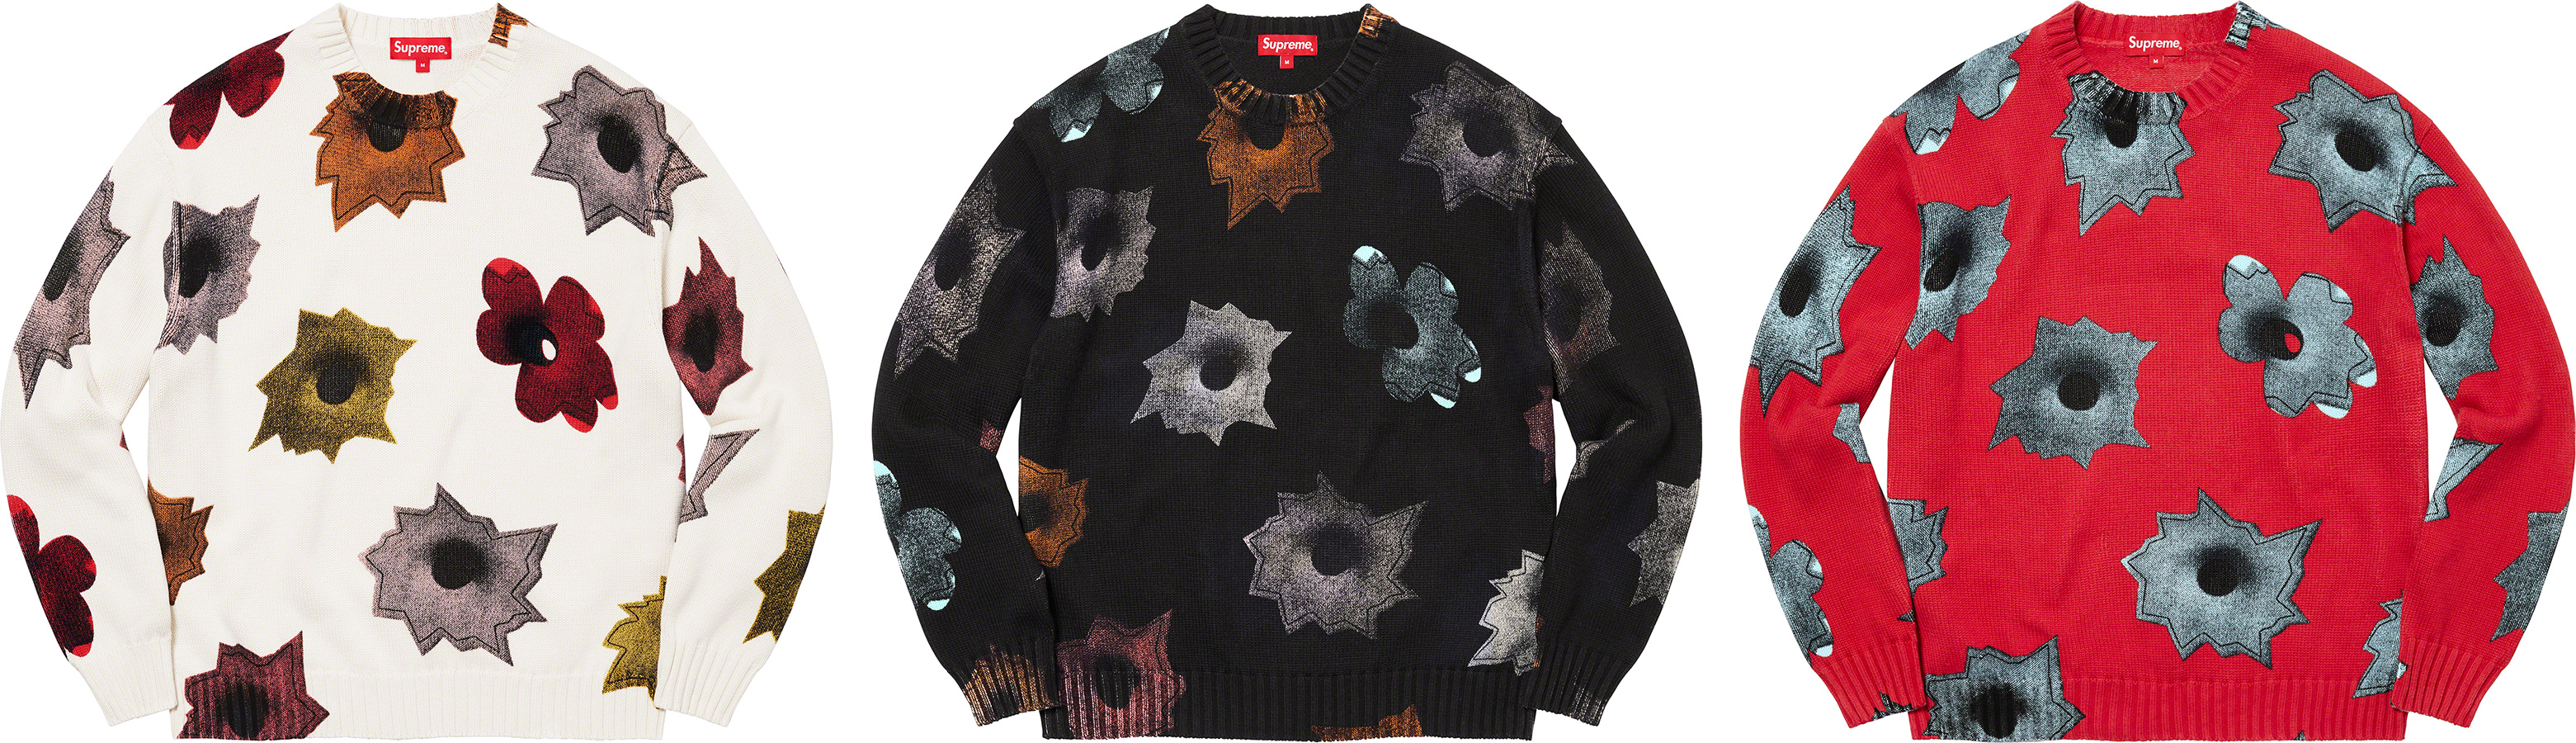 Supreme Nate Lowman sweater M - ニット